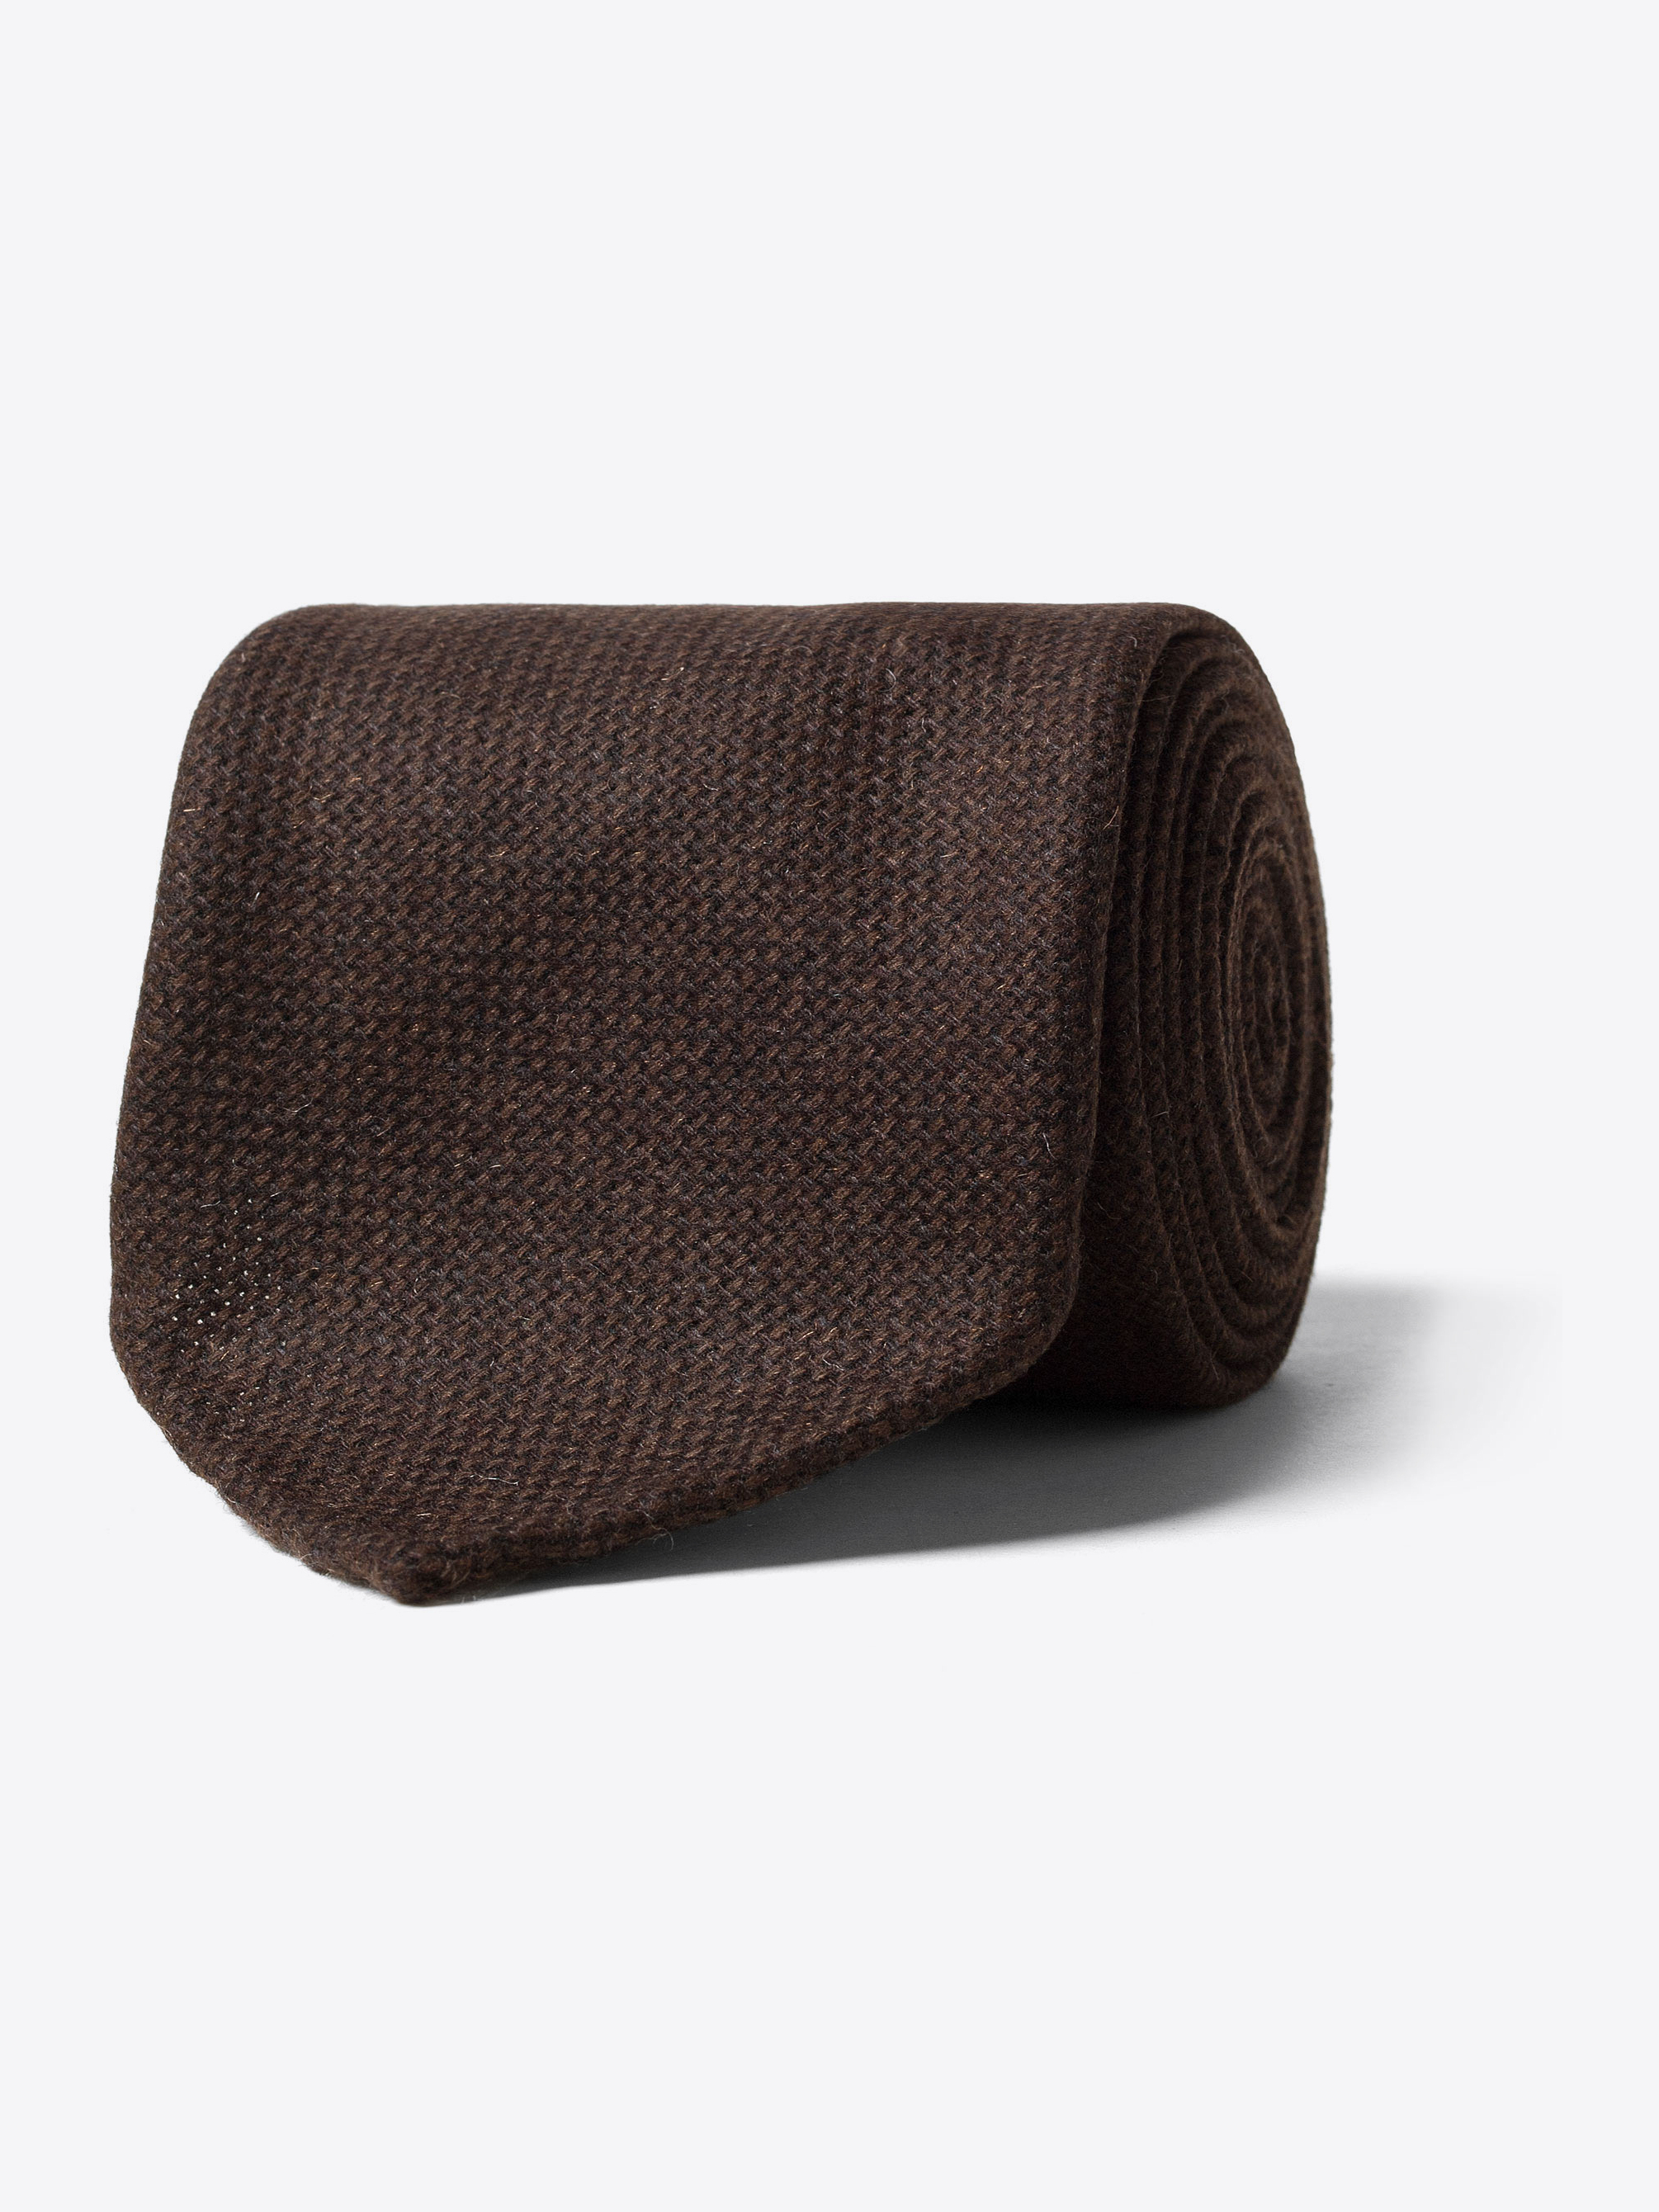 Zoom Image of Chocolate Textured Wool Untipped Tie